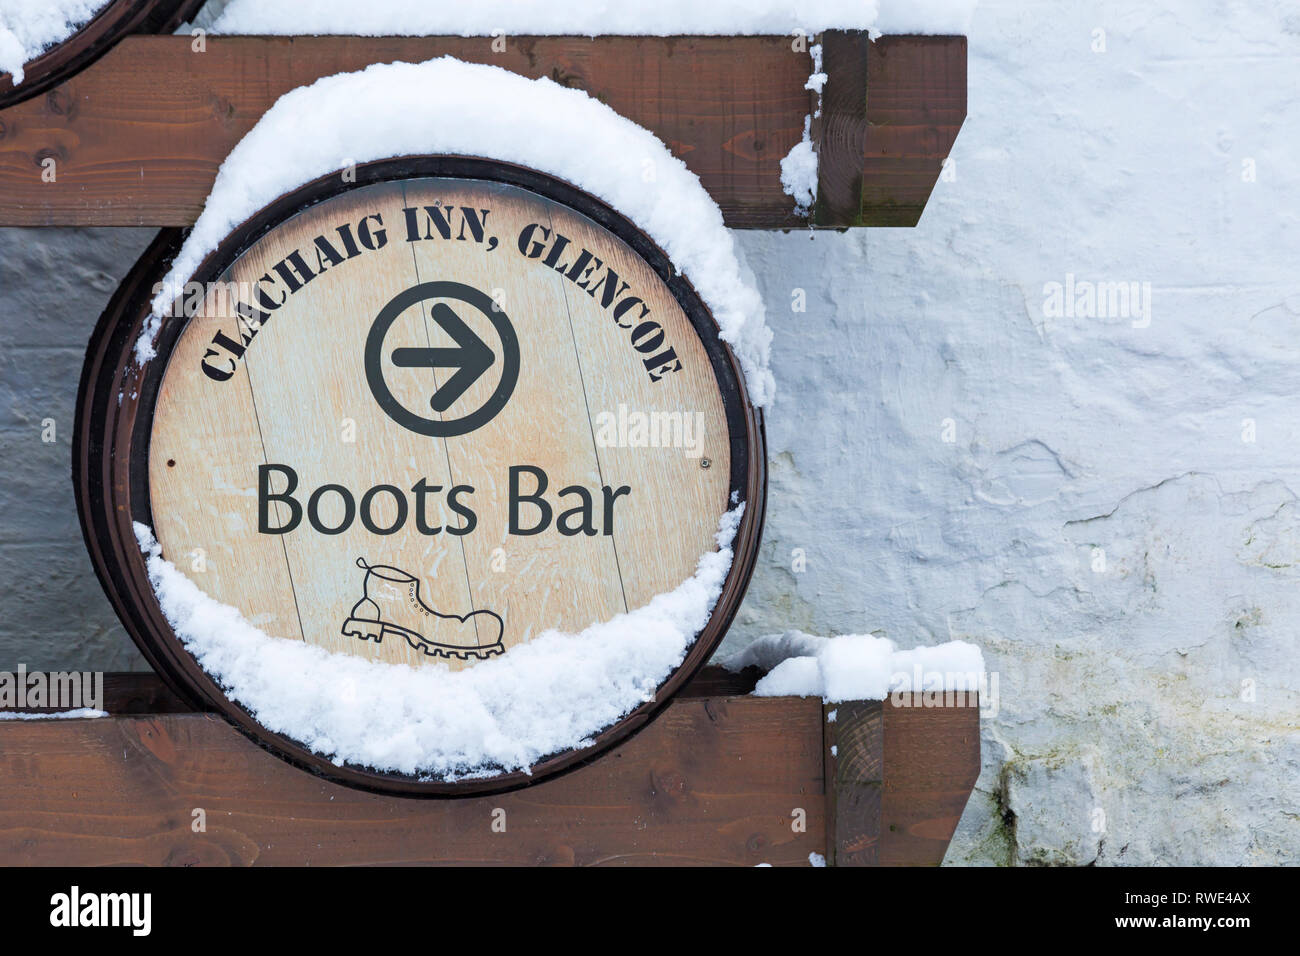 Boots Bar sign on whisky barrel outside Clachaig Inn in the snow at Clachaig Inn, Glencoe, Argyll & Bute, Highlands, Scotland in Winter Stock Photo